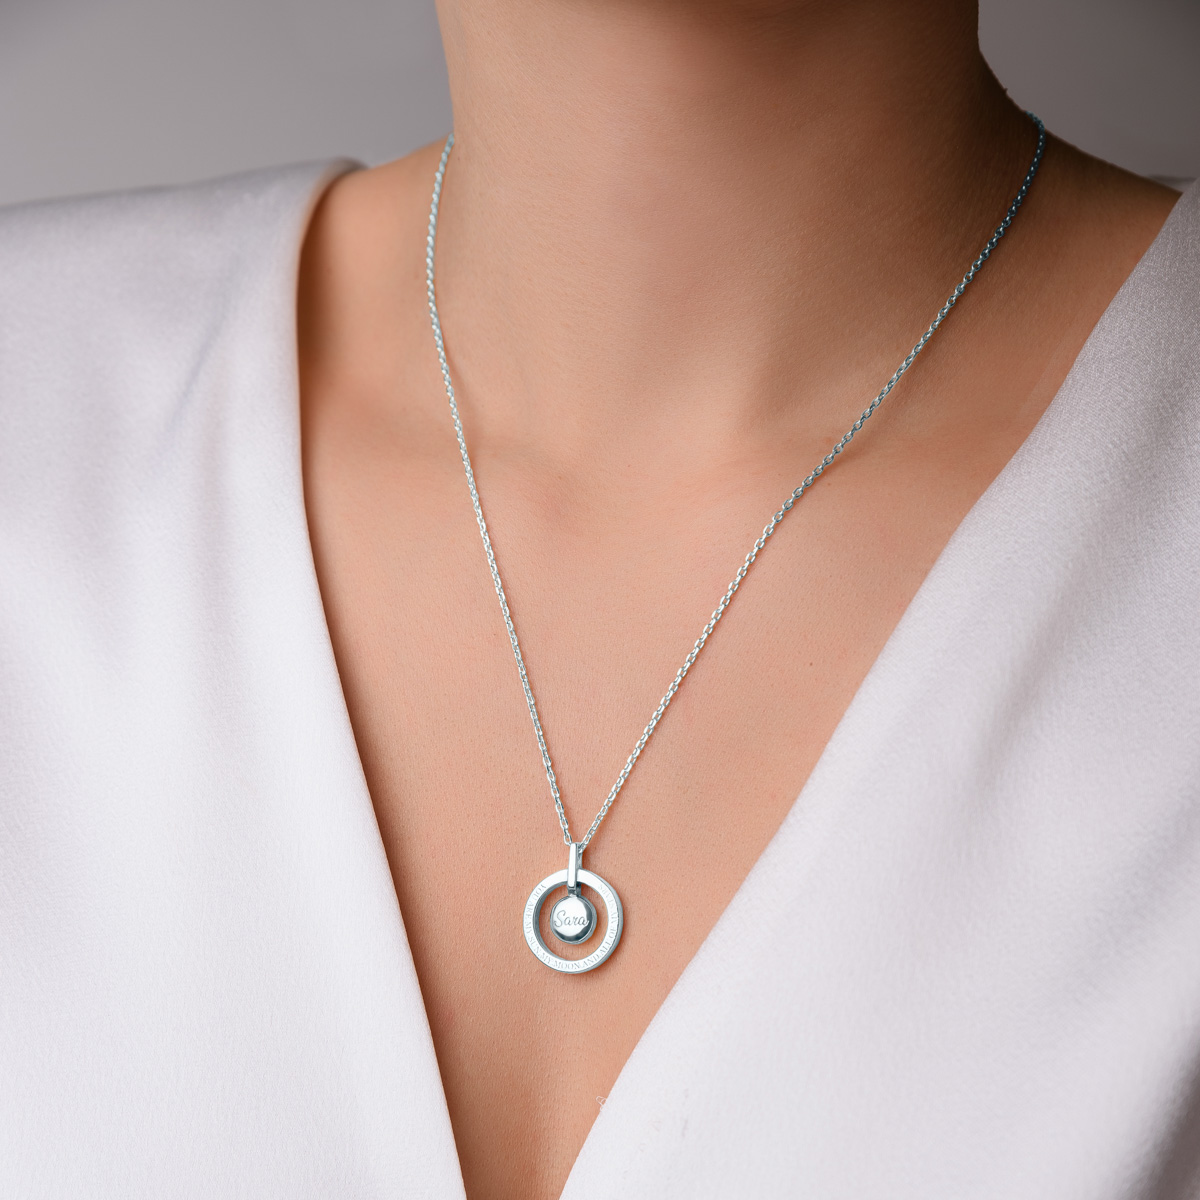 Two Interlocking Circles Necklace: Eternity Necklace, Infinity Necklace, Entwined  Circles, Gift Necklace, 2 Interlocking Circles - Dear Ava